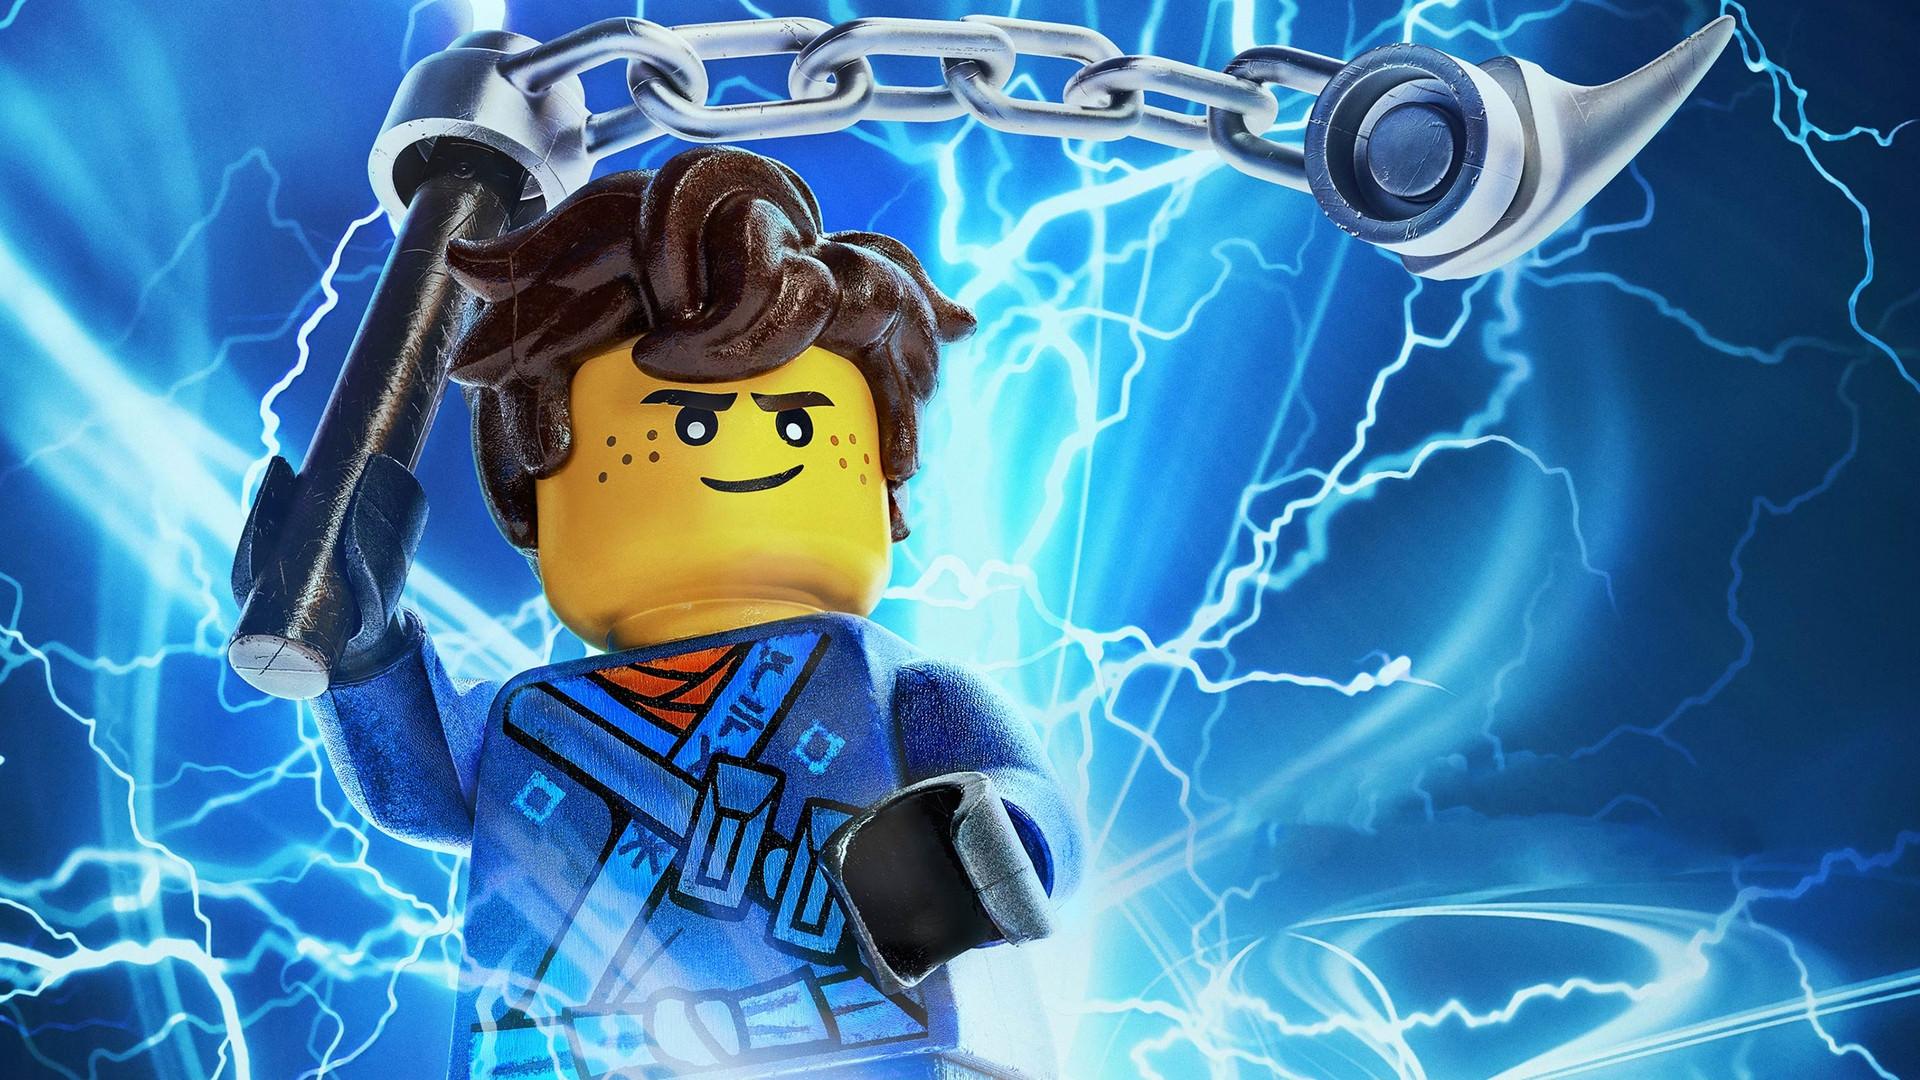 LEGO Ninjago Movie Minifigure - Garmadon with Blue Ninja Armor and Hair - wide 7